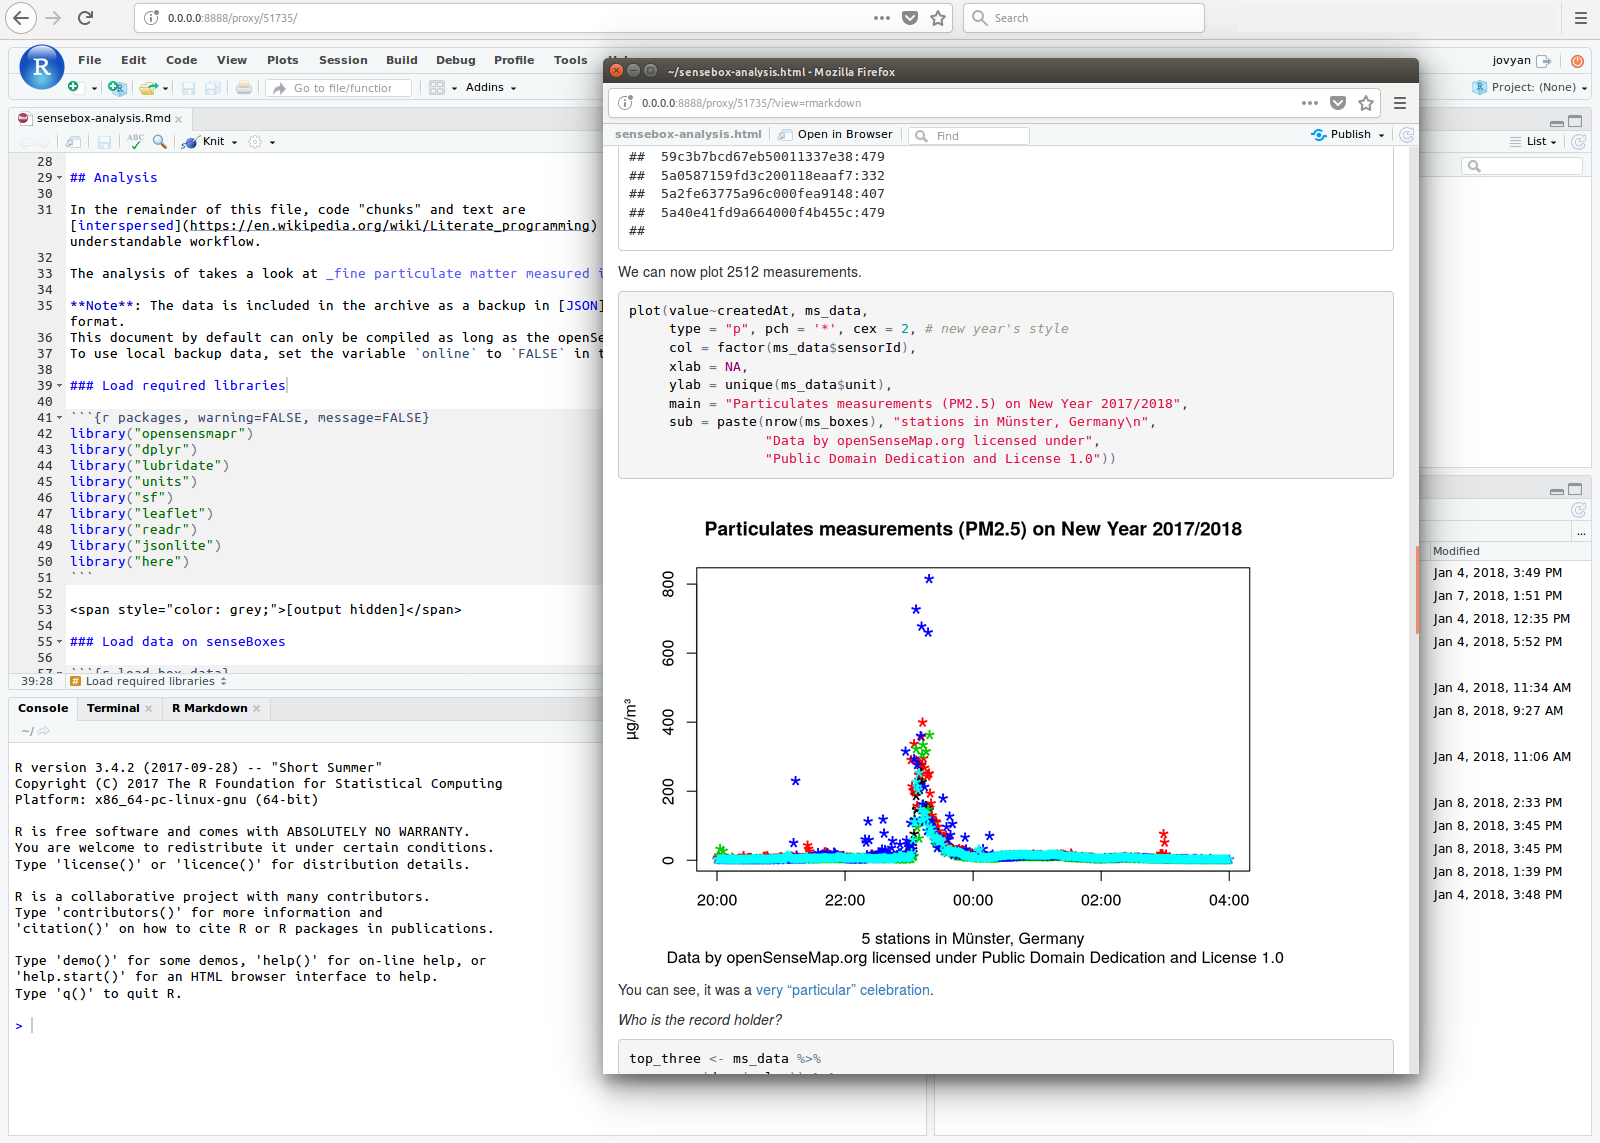 screenshot of senseBox-Binder analysis in RStudio